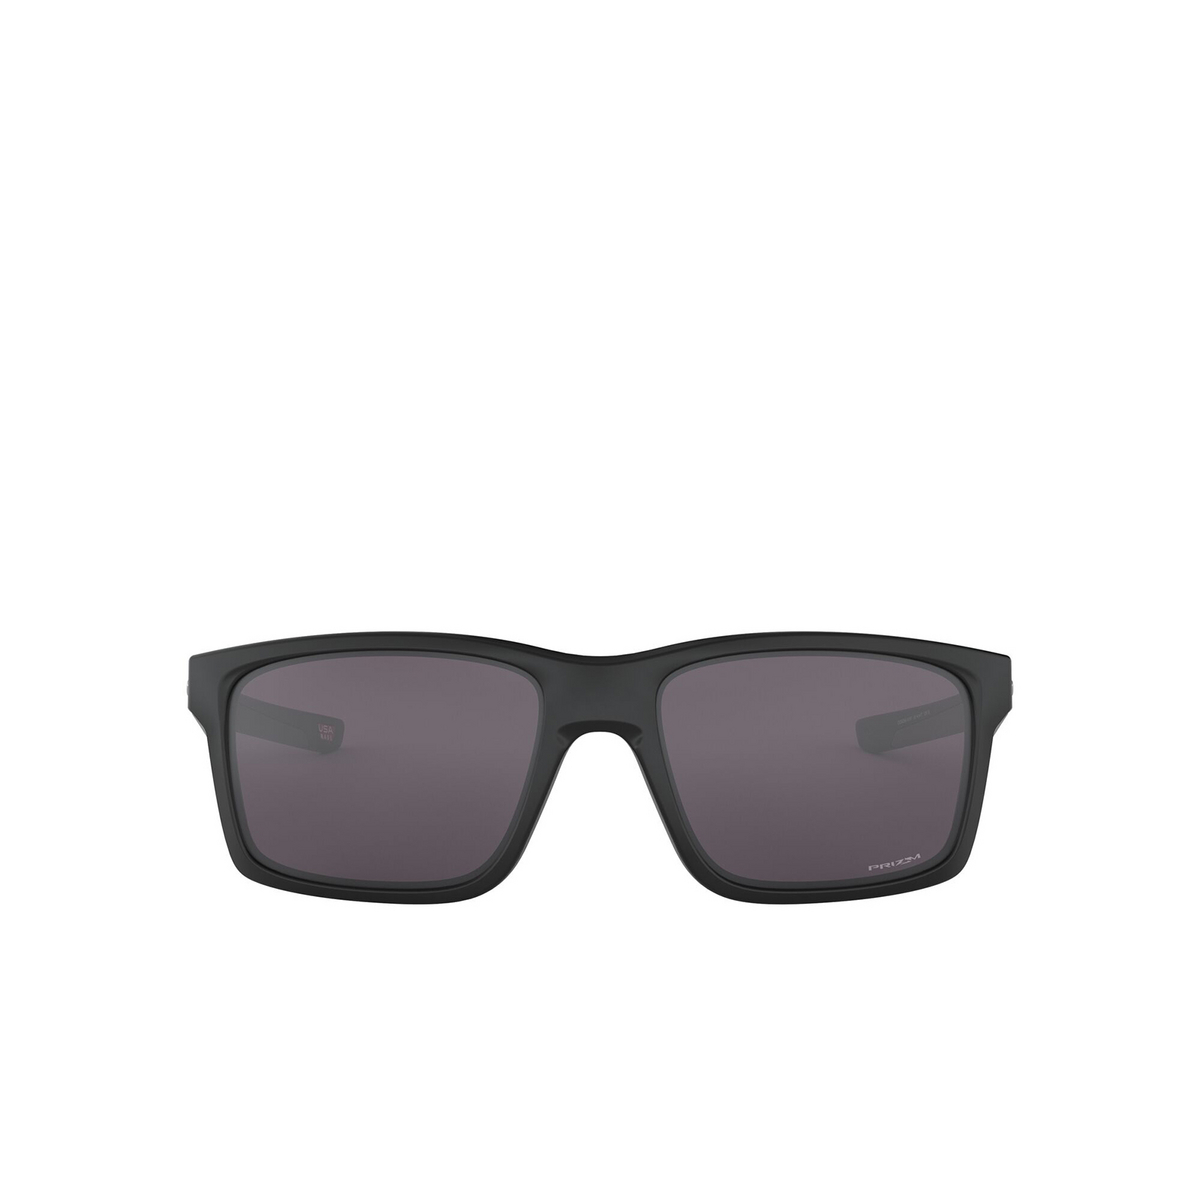 Oakley® Rectangle Sunglasses: OO9264 Mainlink color 926441 Matte Black - front view